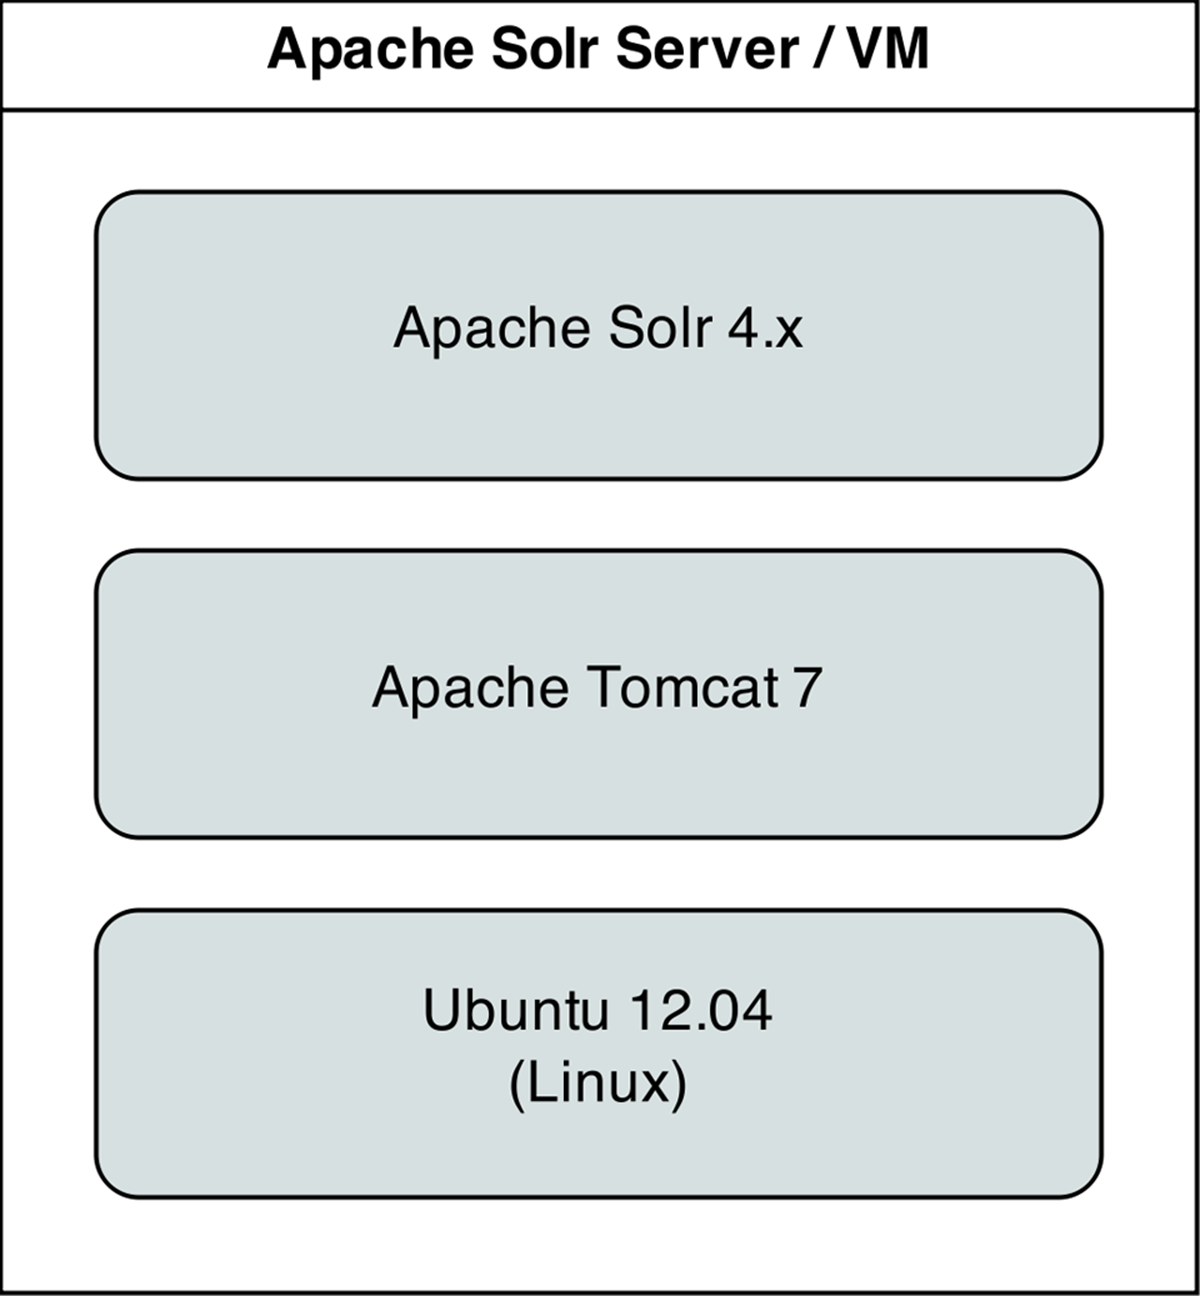 Apache Solr Server